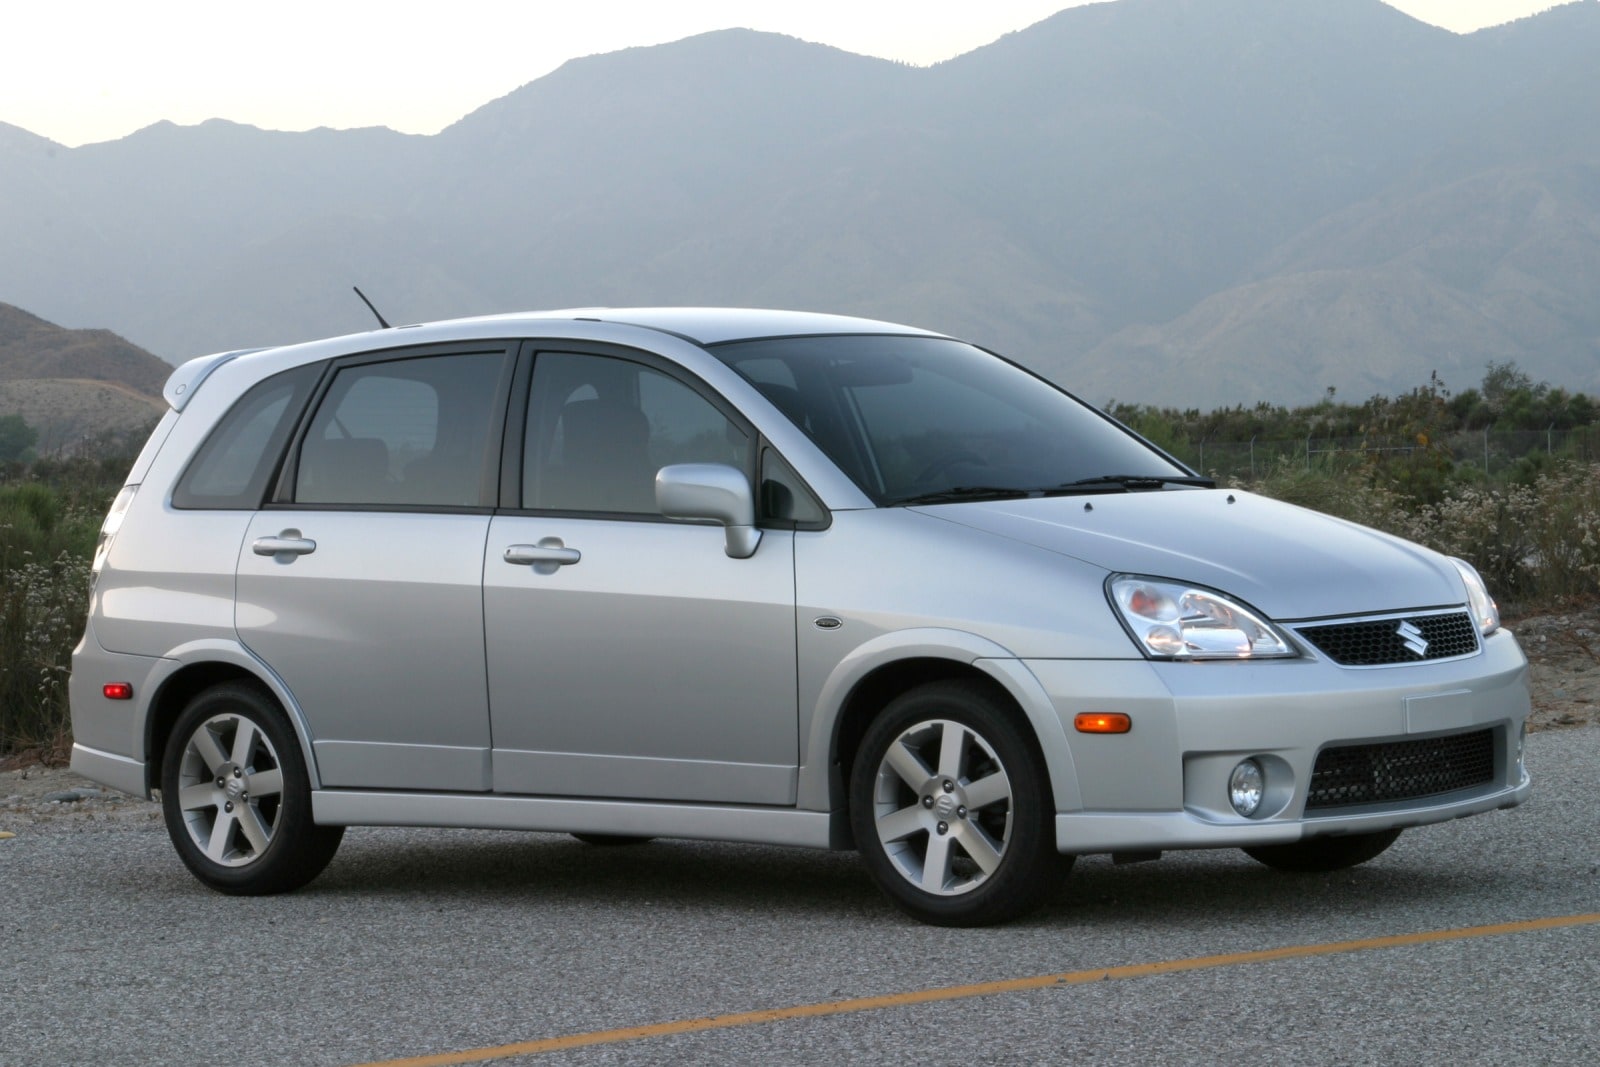 2006 Suzuki Aerio Review & Ratings | Edmunds